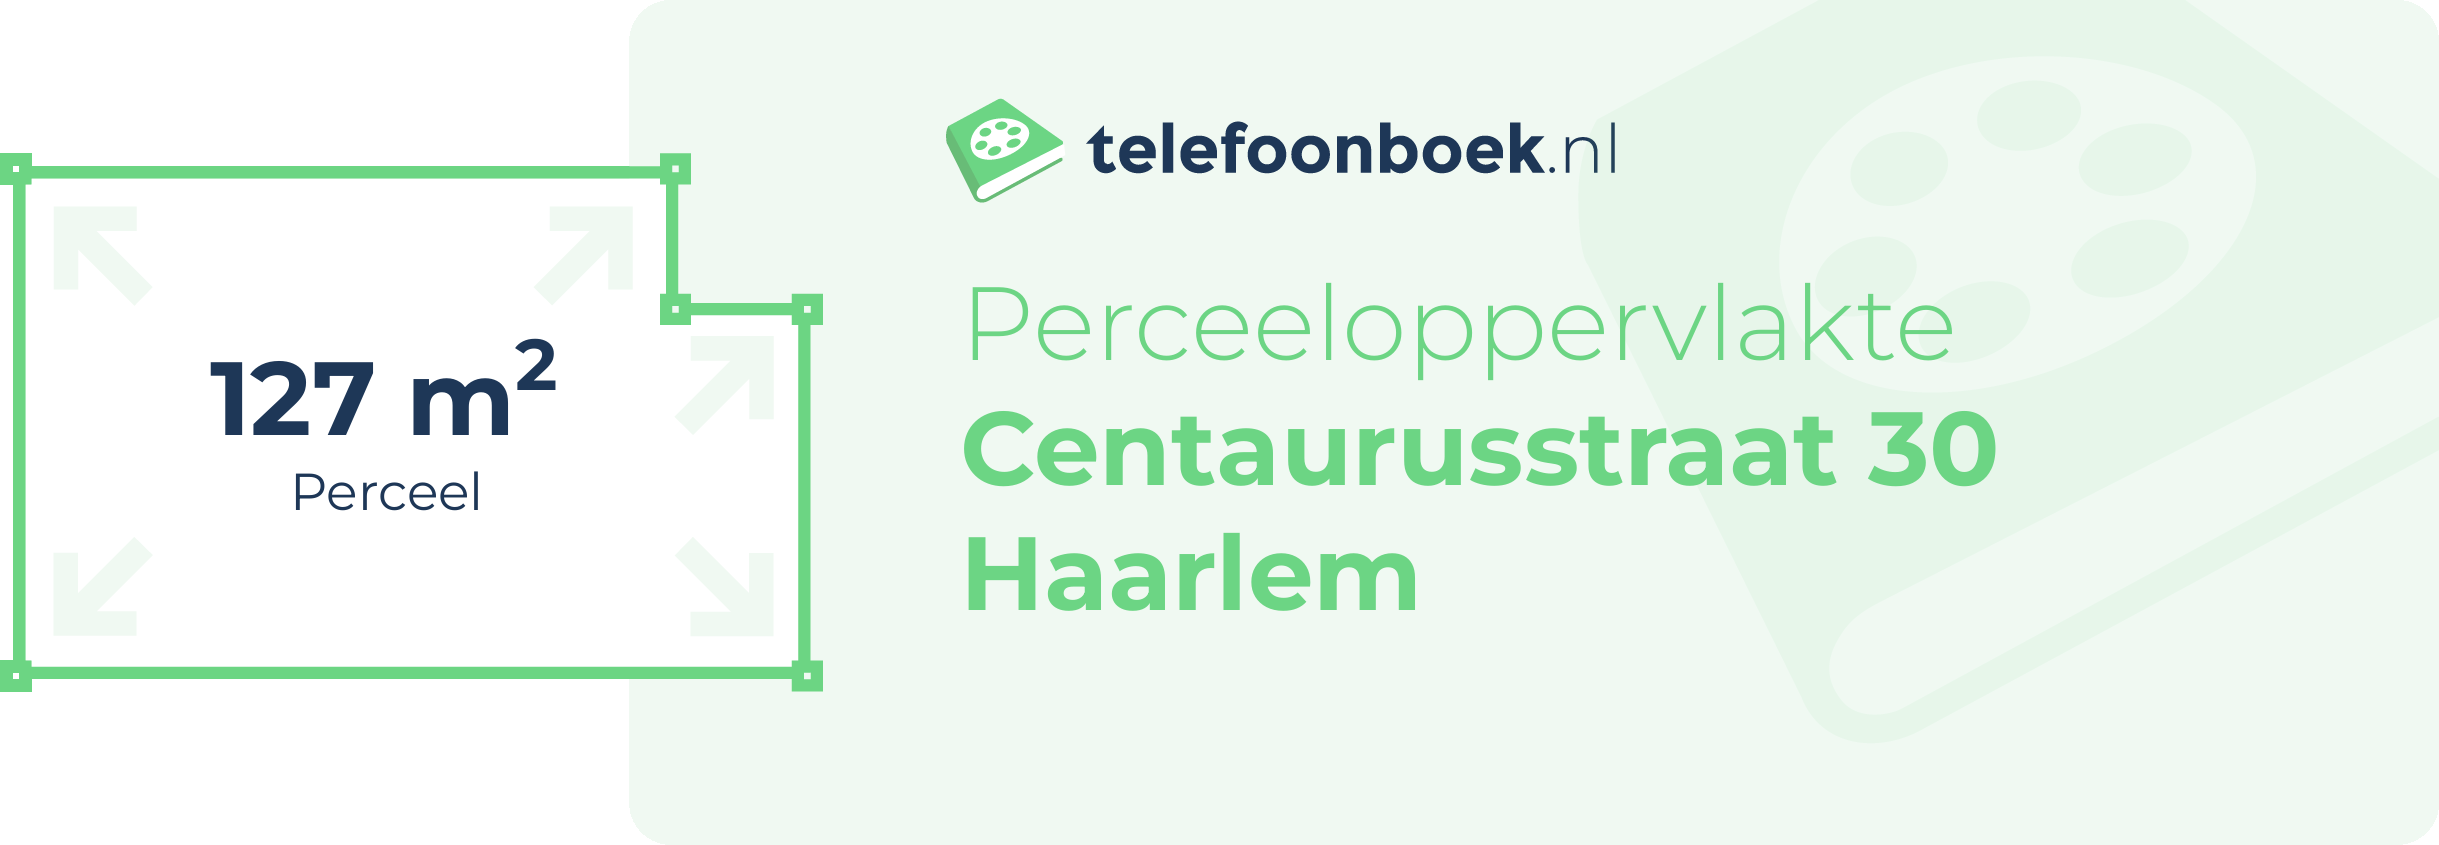 Perceeloppervlakte Centaurusstraat 30 Haarlem